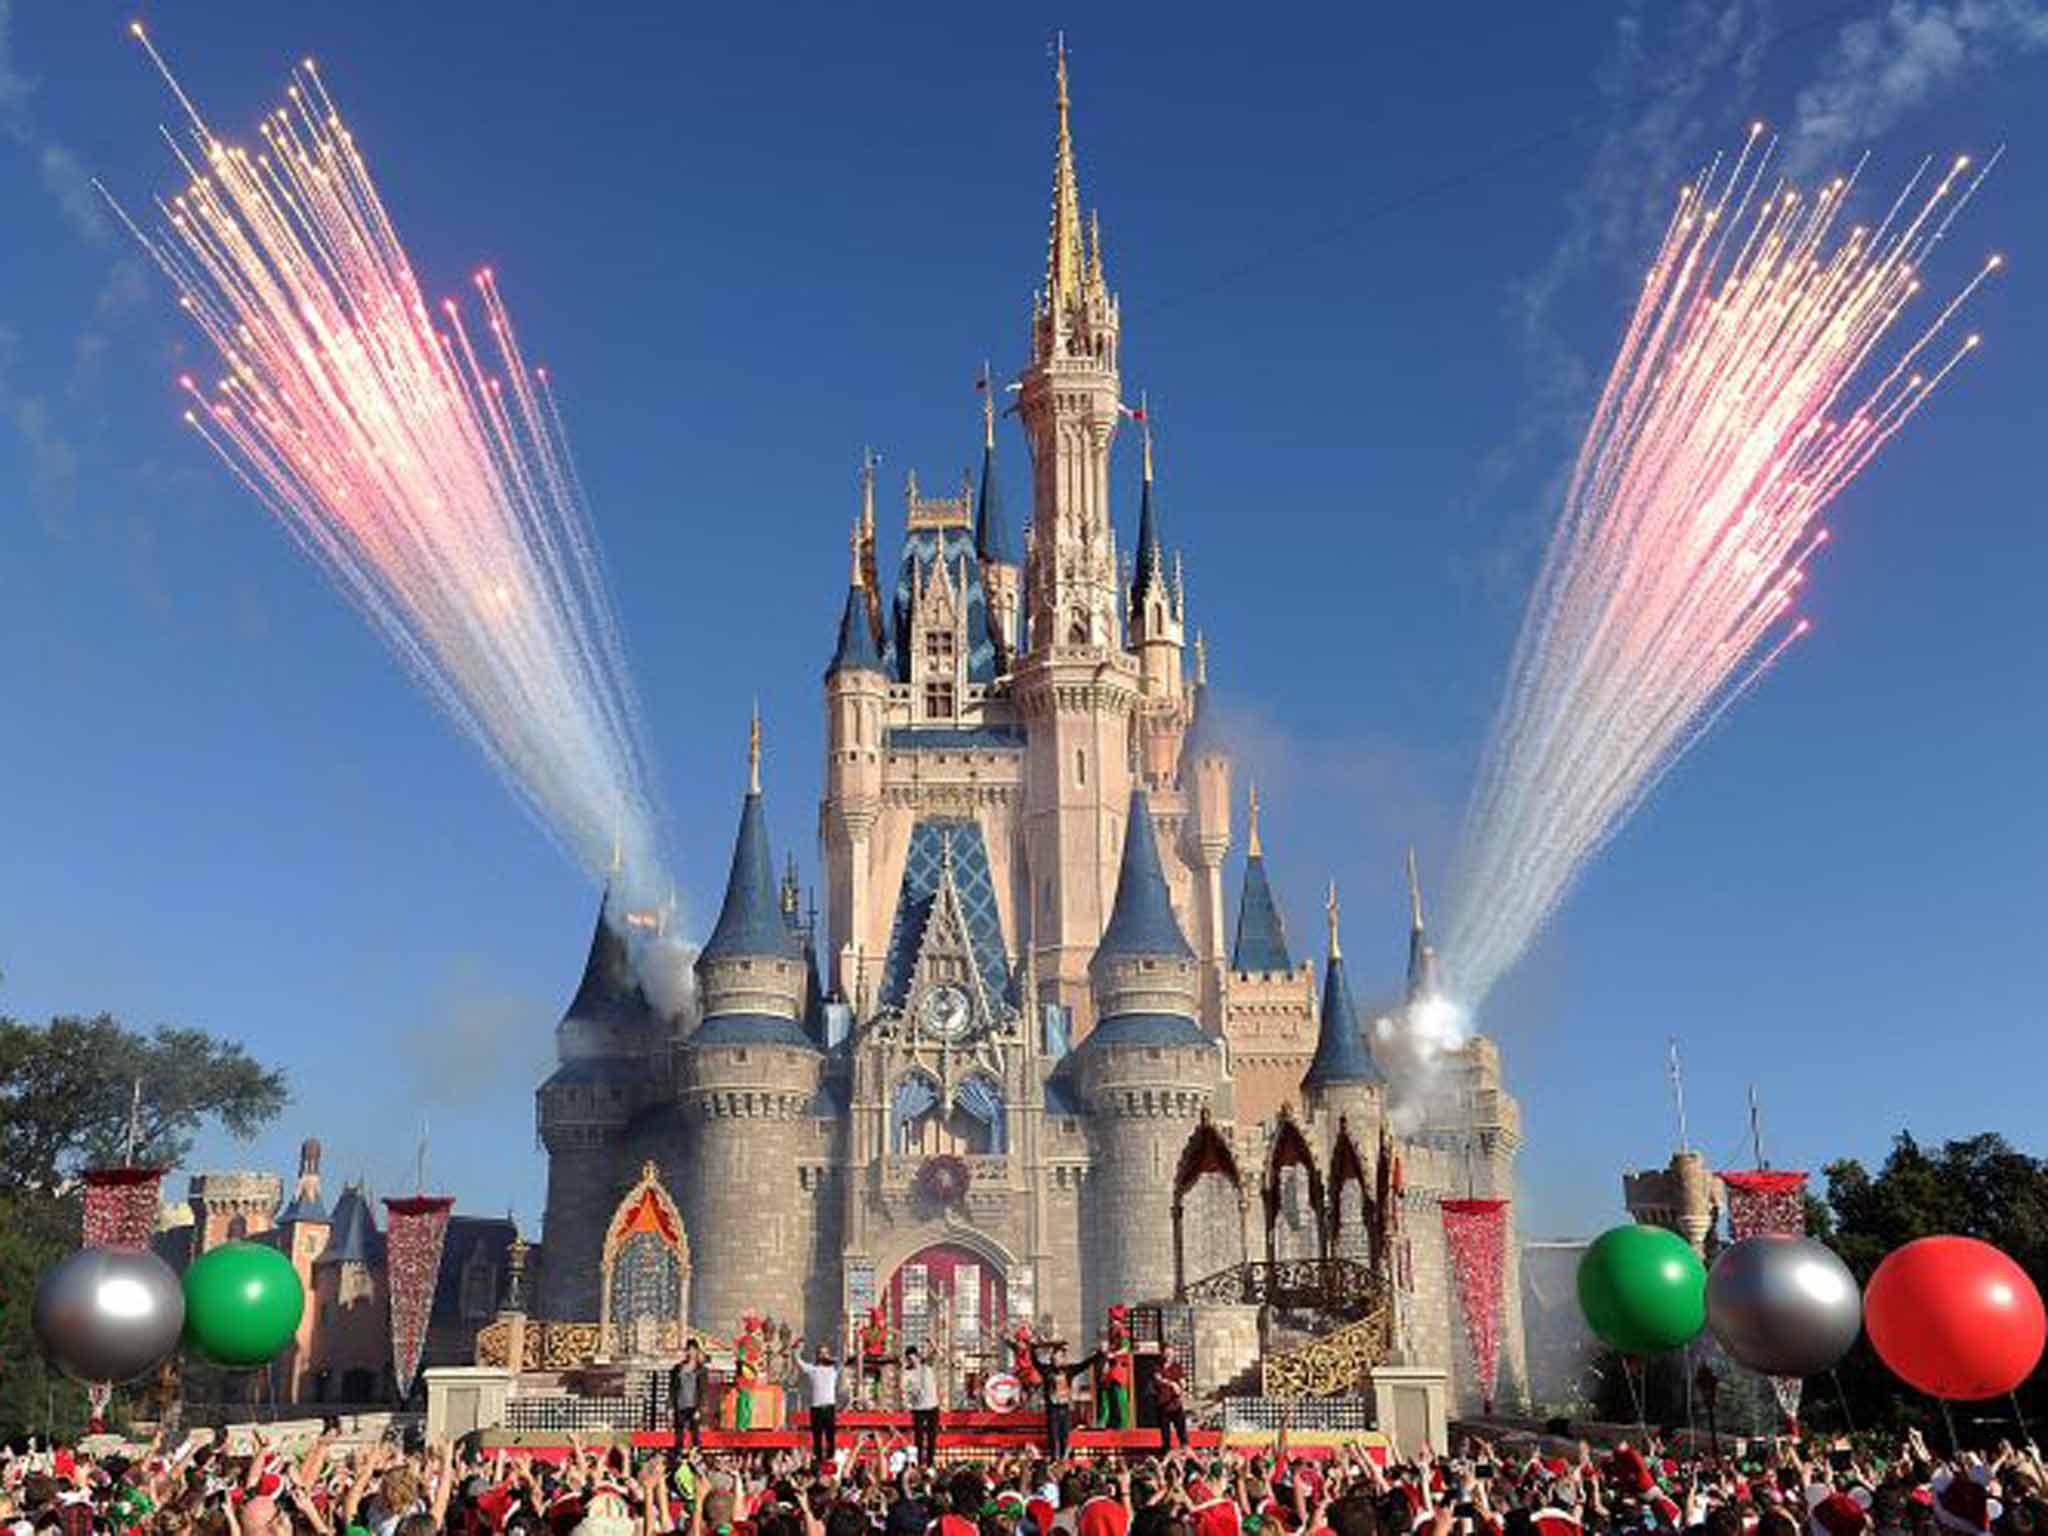 &#13;
Disney World’s Magic Kingdom: Demand-based pricing &#13;